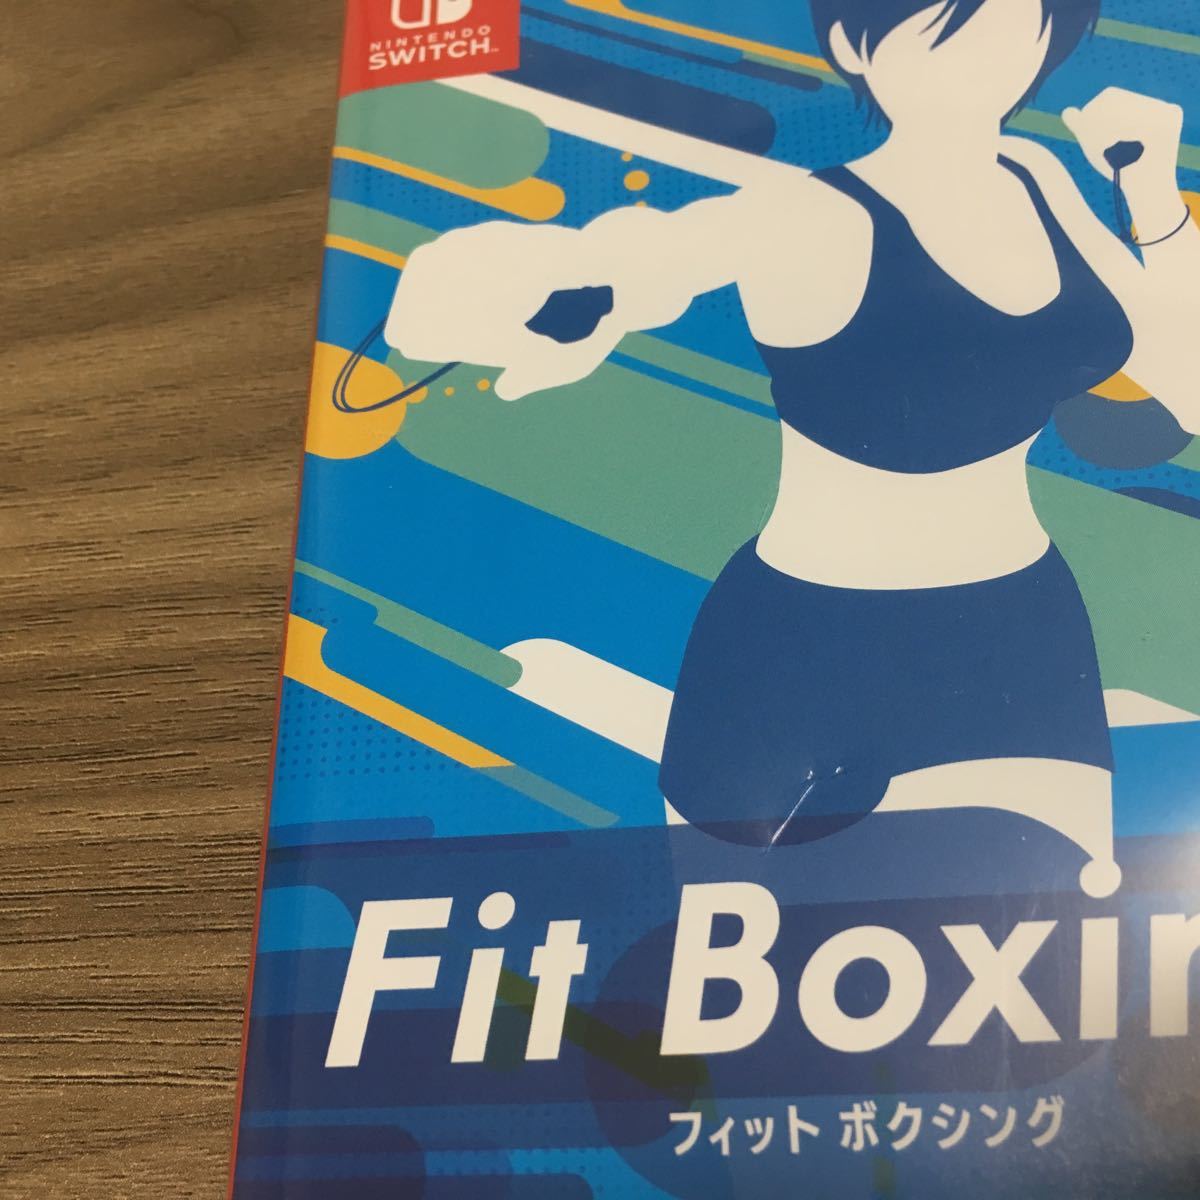 Switchソフト Fit Boxing（フットボクシング） パッケージ版